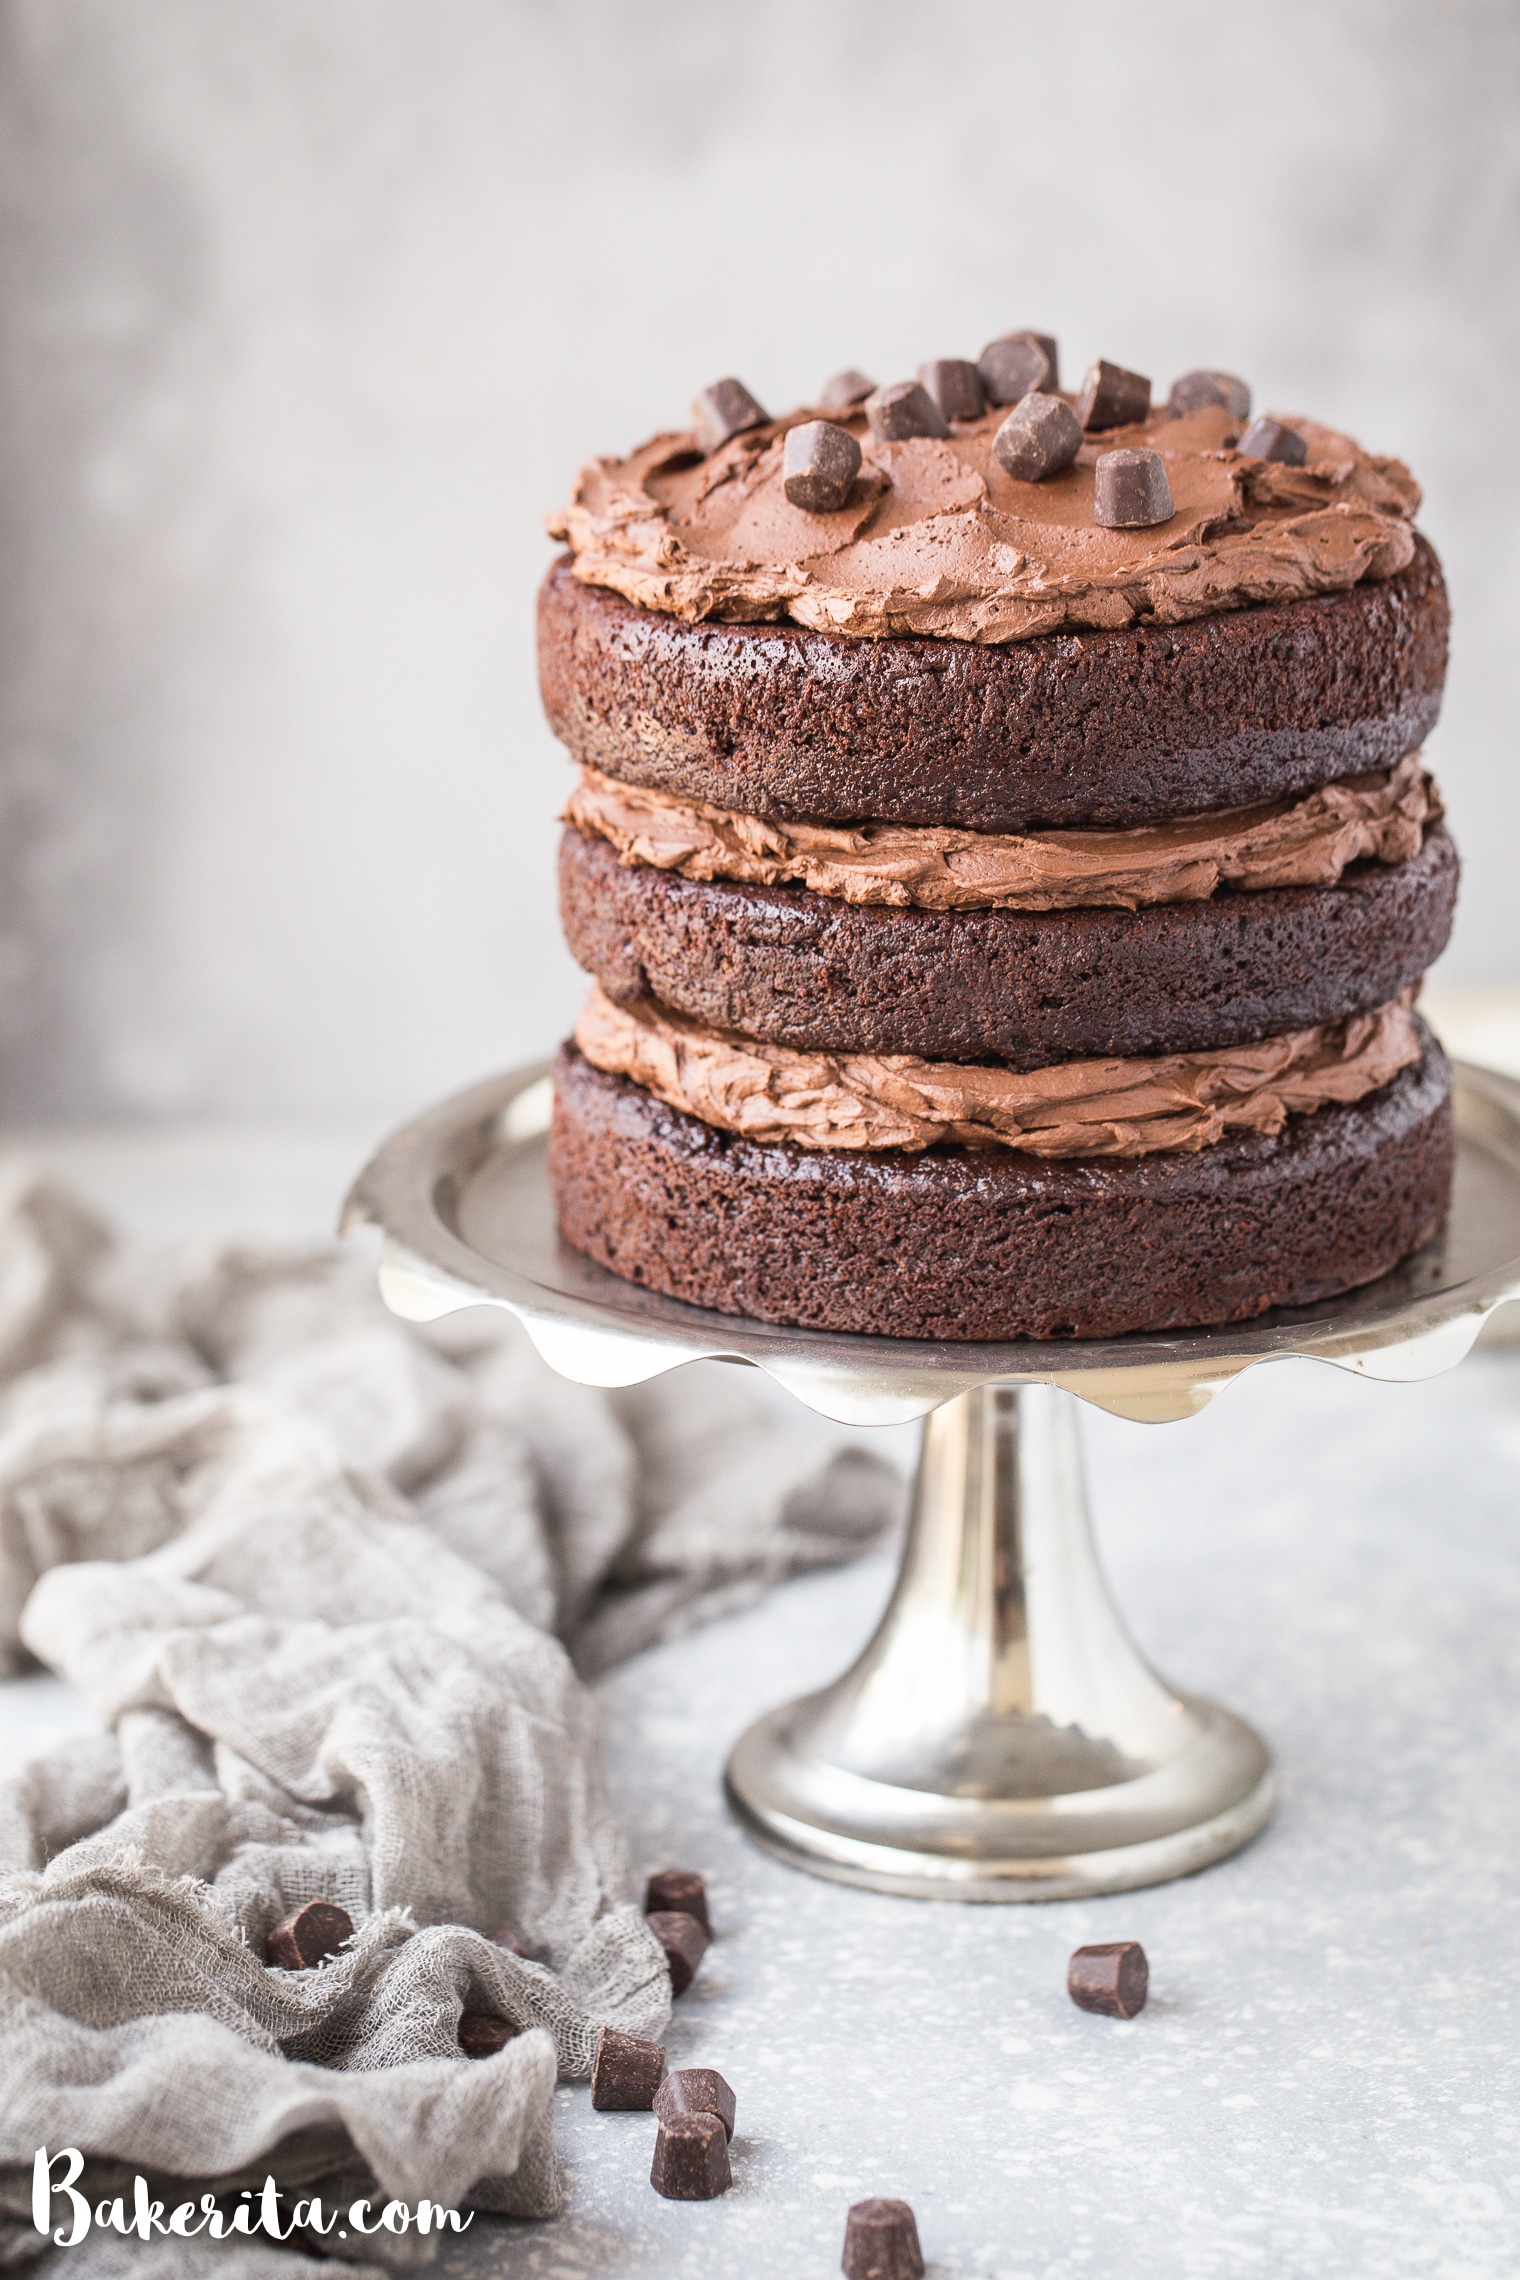 Easy Vegan Chocolate Cake | Jessica in the Kitchen